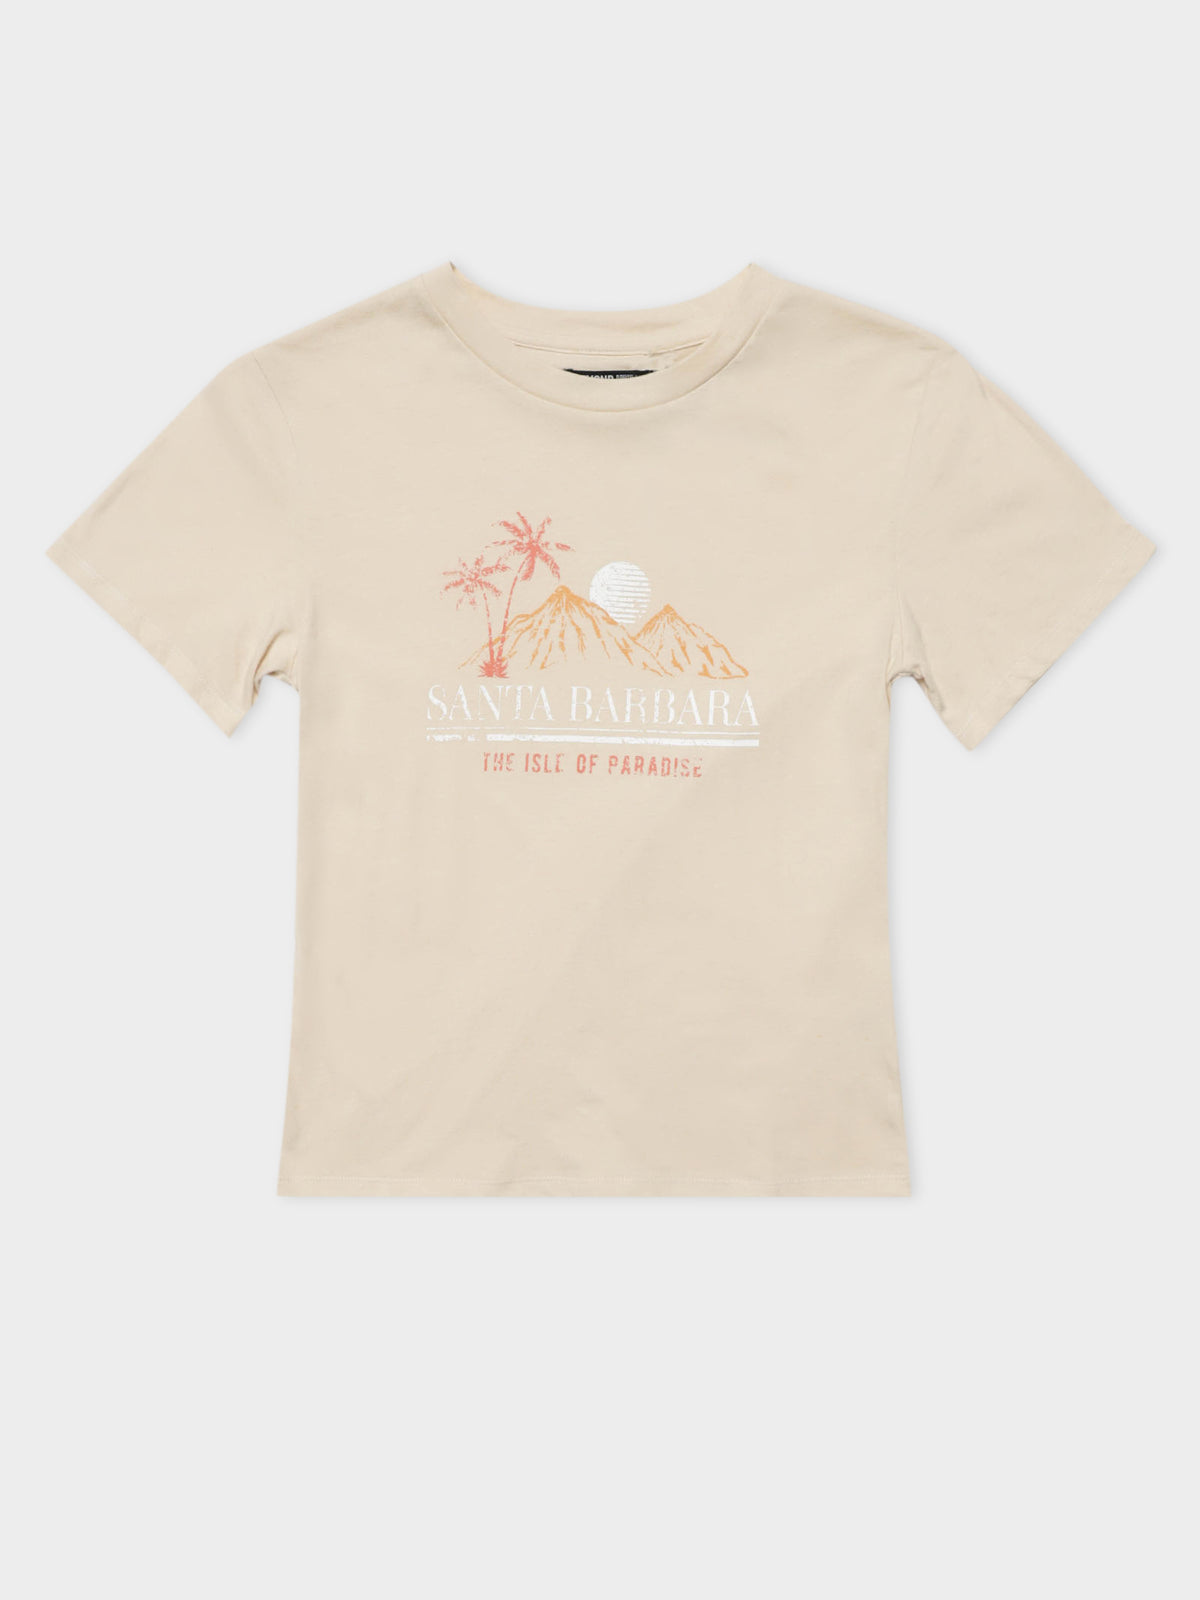 Santa Barbara T-Shirt in Sand